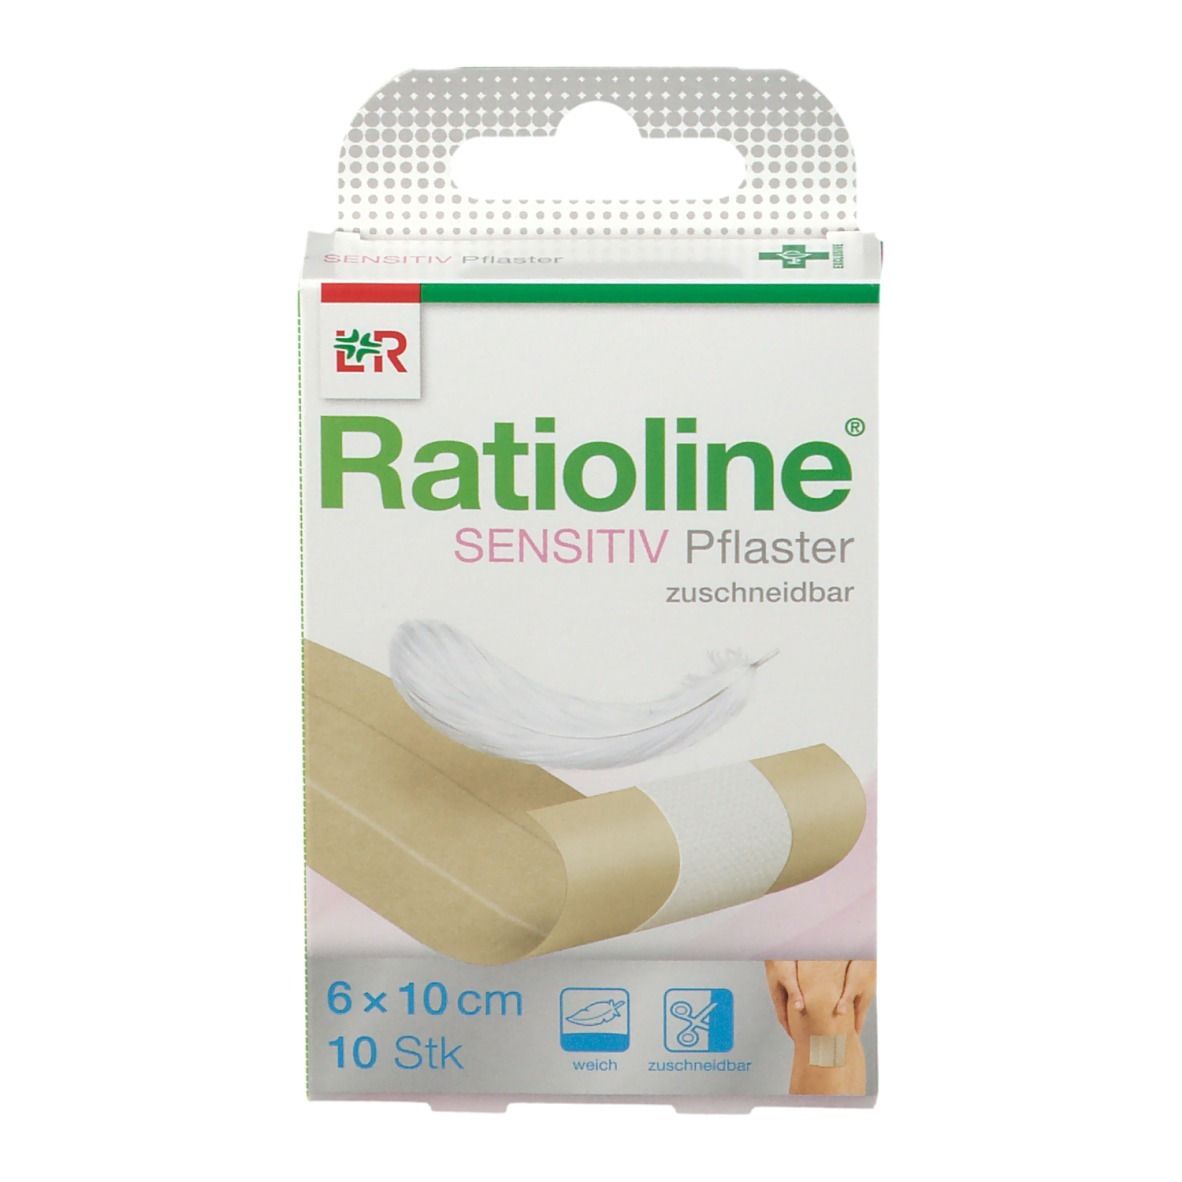 Ratioline® sensitive Wundschnellverband 6 cm x 10 cm